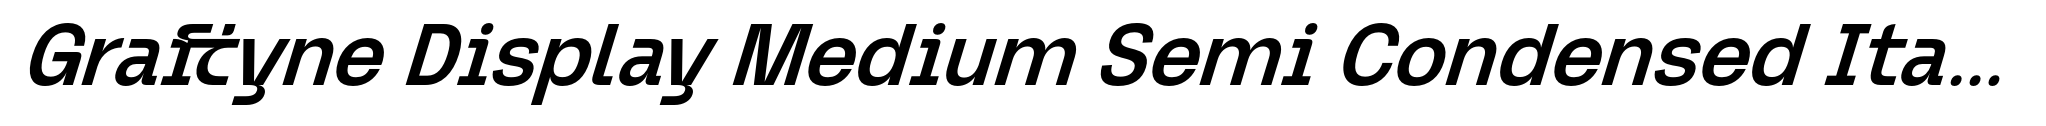 Graftyne Display Medium Semi Condensed Italic image